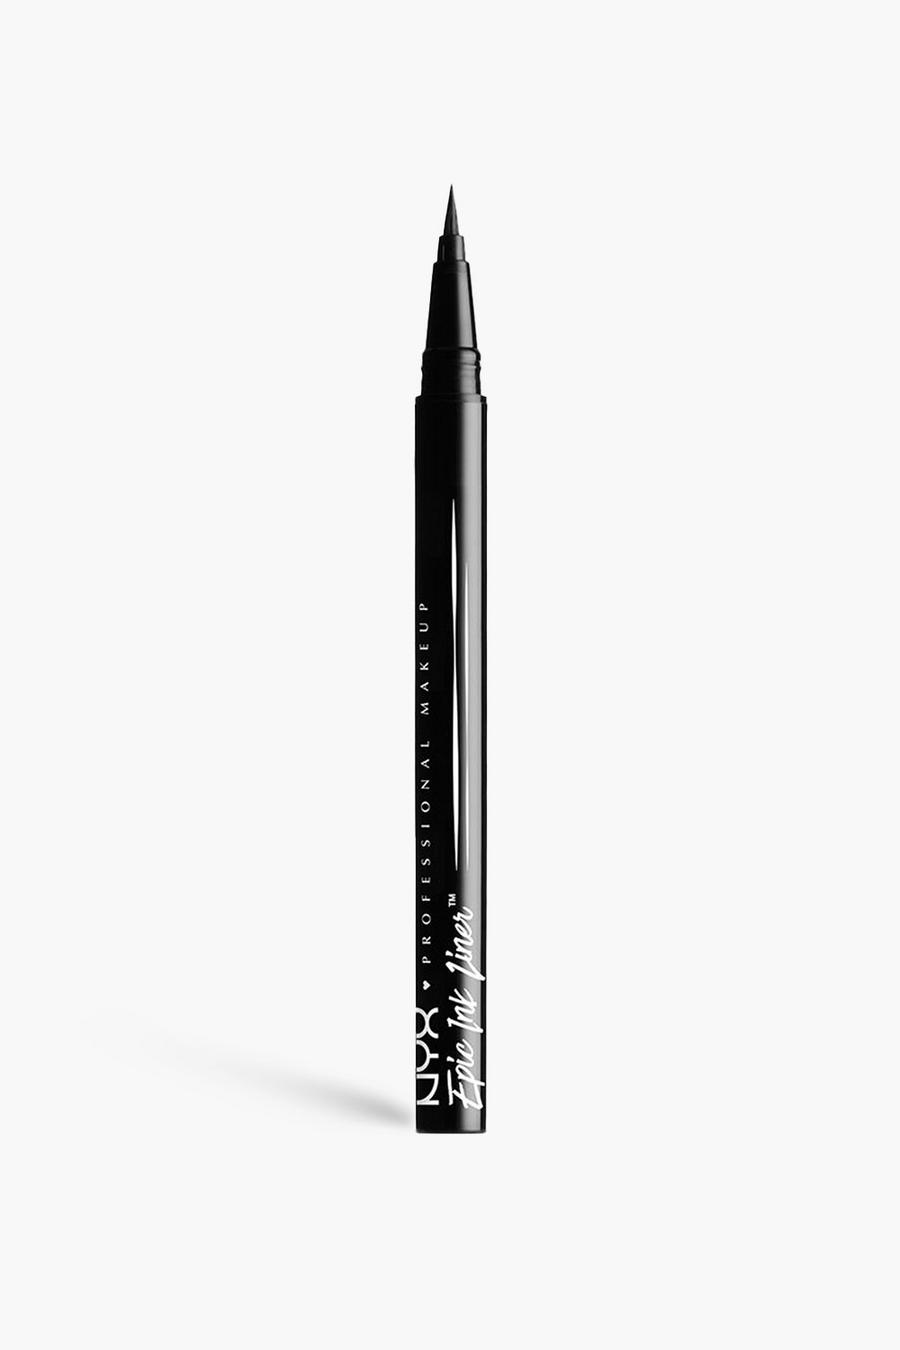 NYX Professional Makeup - Eyeliner - Epic Ink, Black